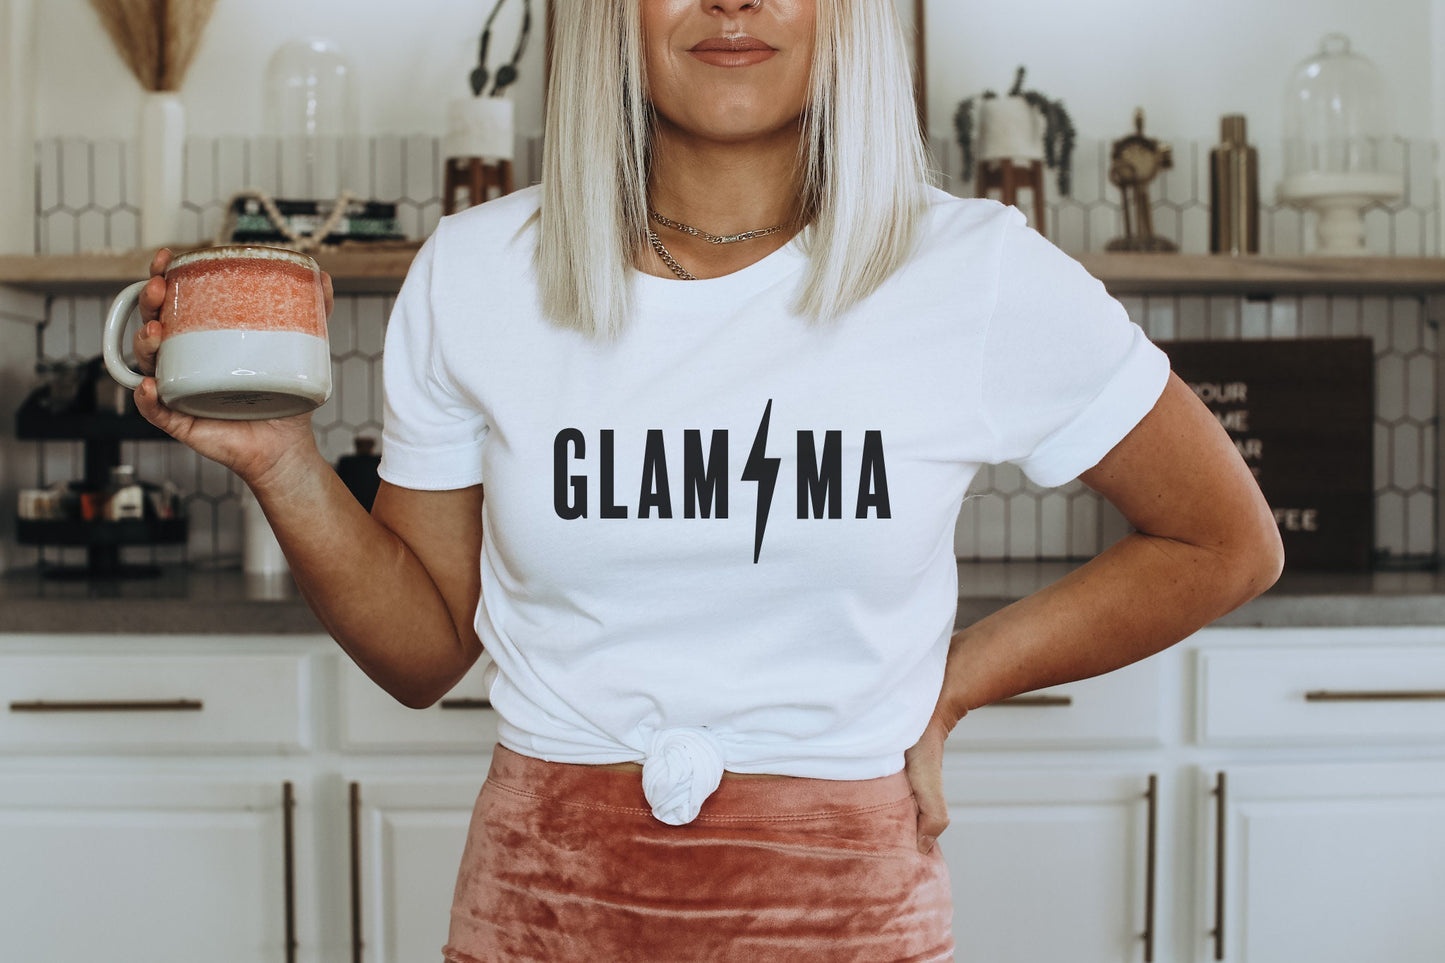 Glamma Shirt, Gift for Grandma, Glam-ma Shirt, Grandma Tshirt, Glamorous Grandma, Grandma Shirt, Glamorous Shirt, Promoted to grandma shirt